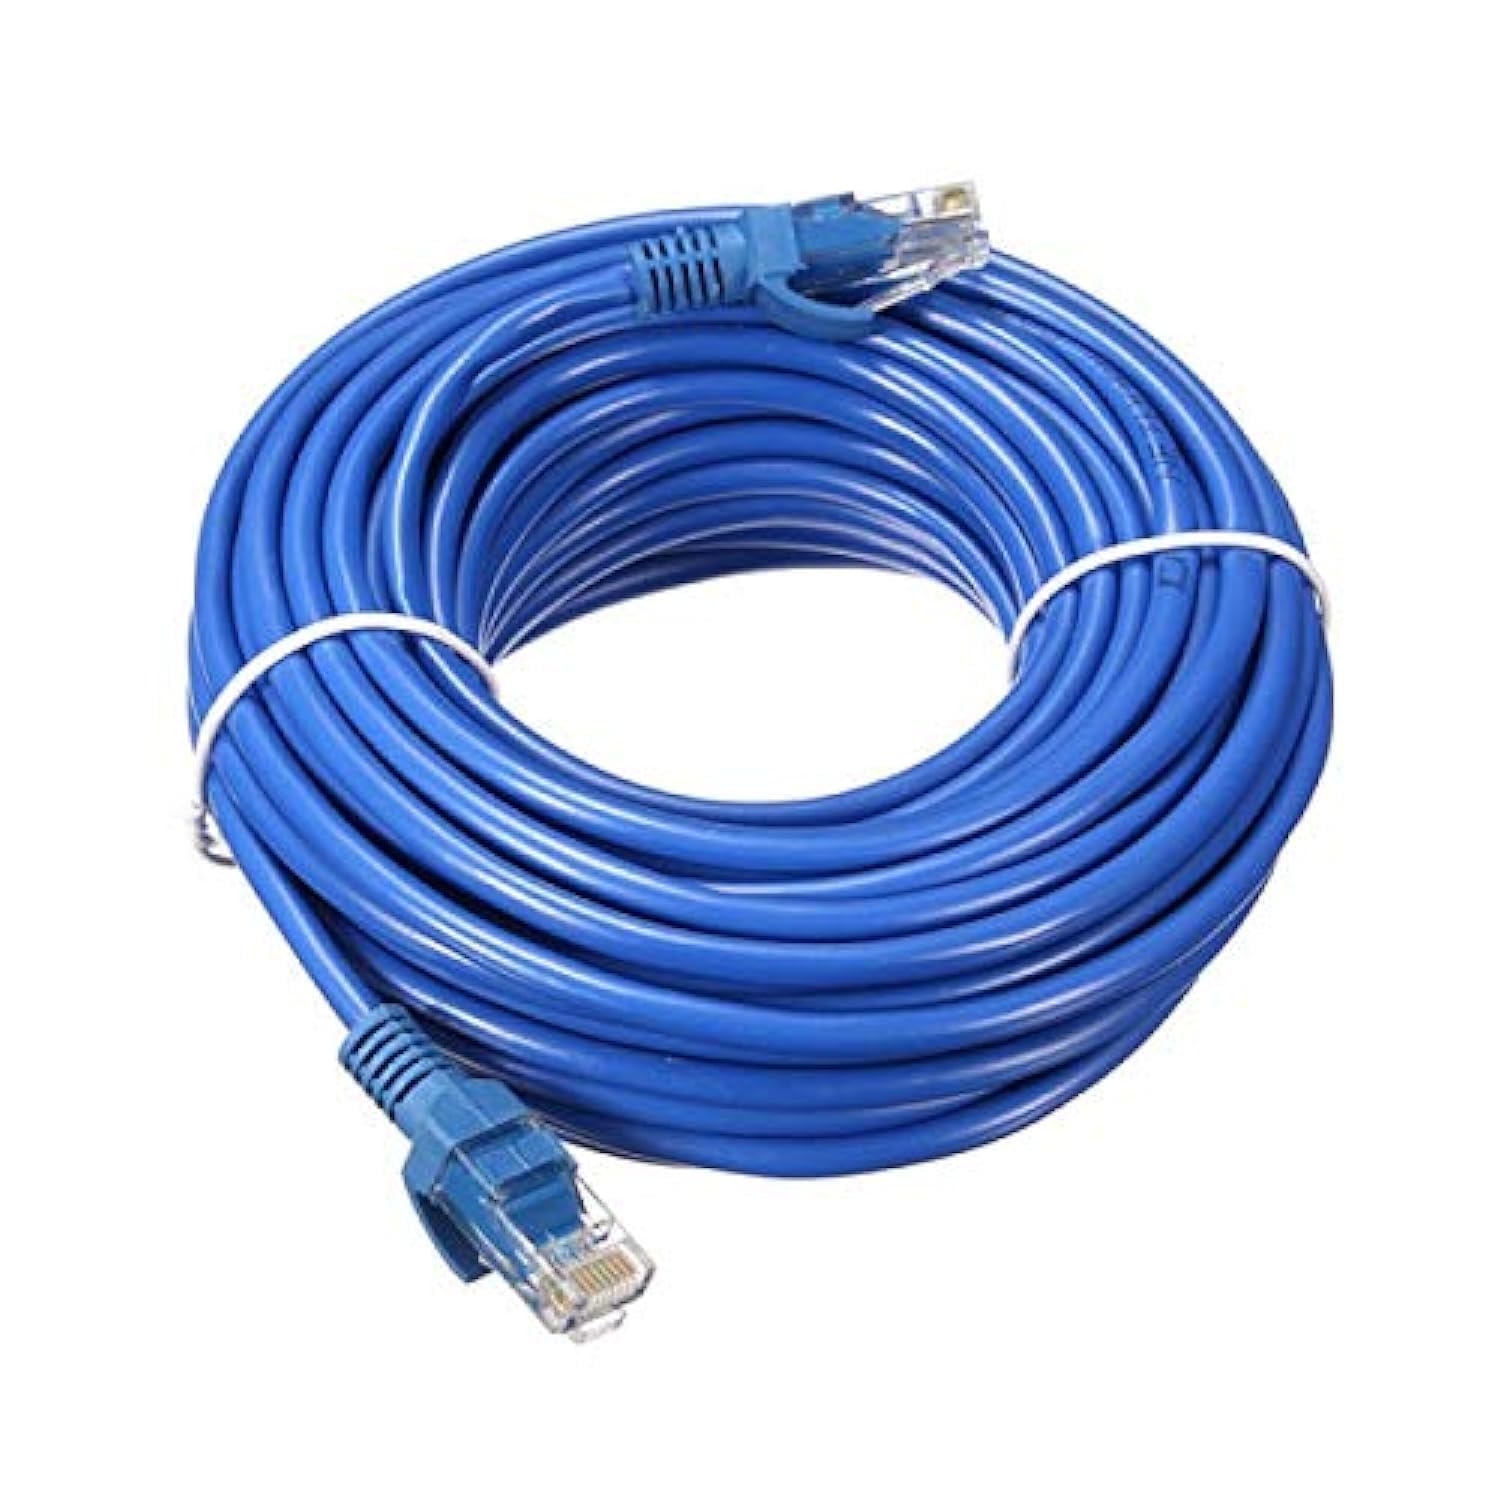 ANDTRONICS CAT-6 Snagless Network RJ45 Ethernet Patch LAN Cable CAT6-20M / 60 ft - Blue